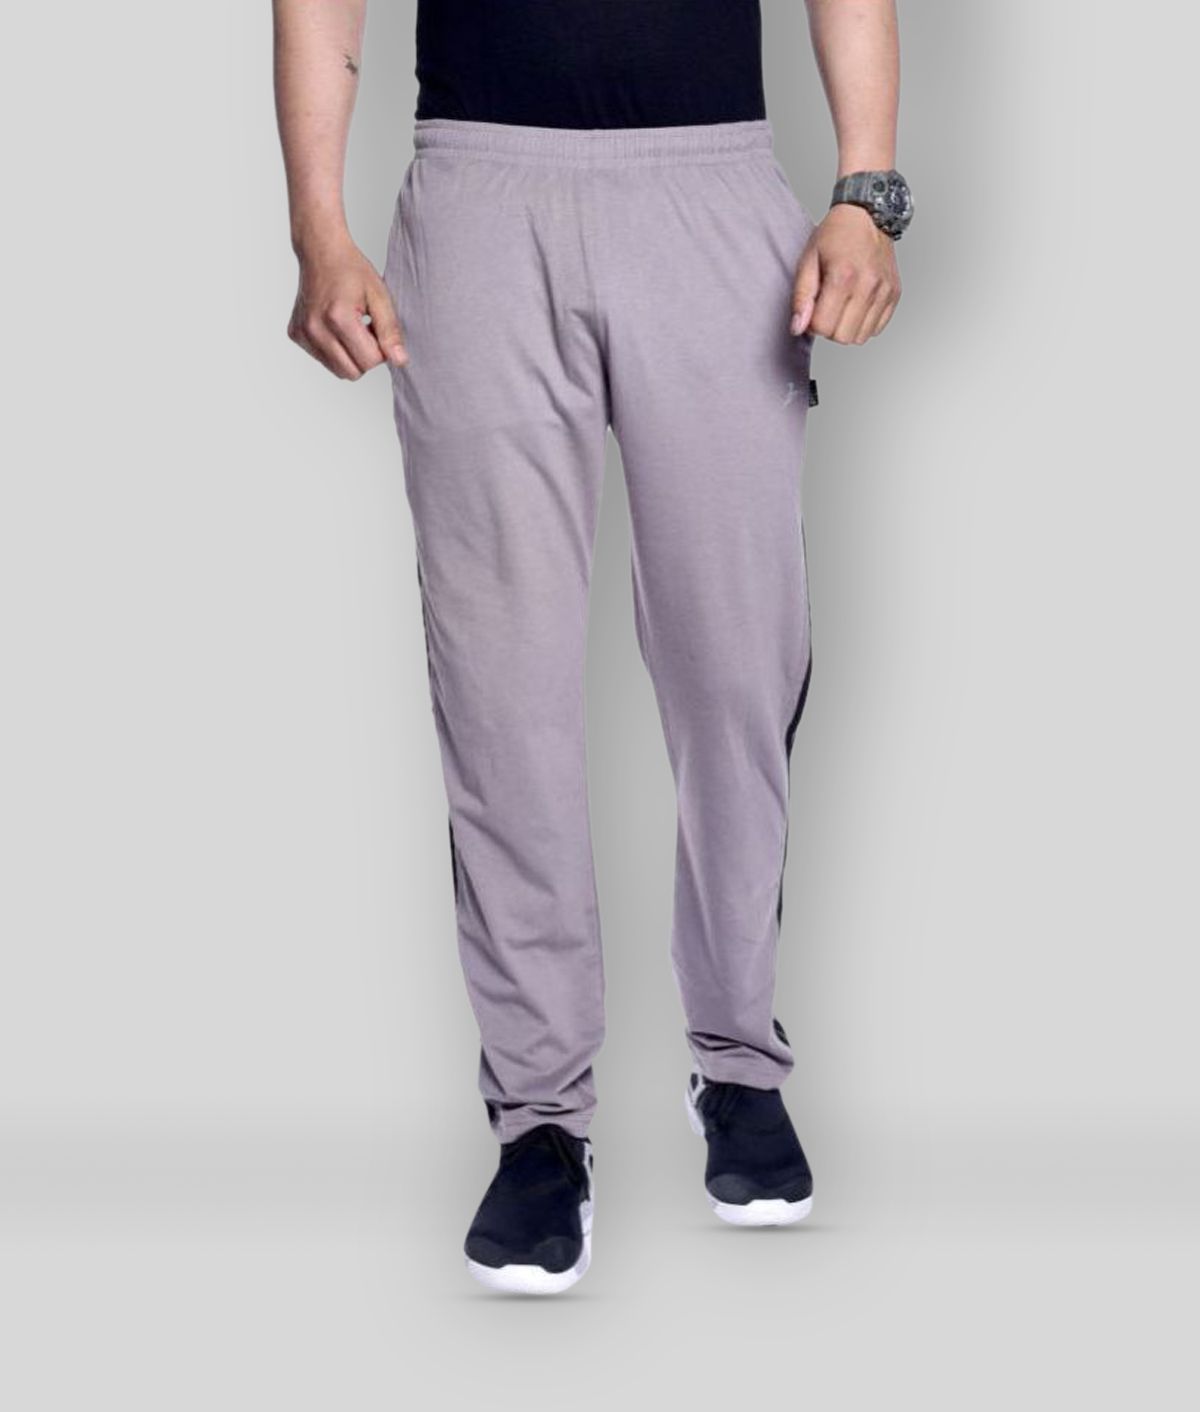 Zeffit - Grey Cotton Men's Trackpants ( Pack of 1 )